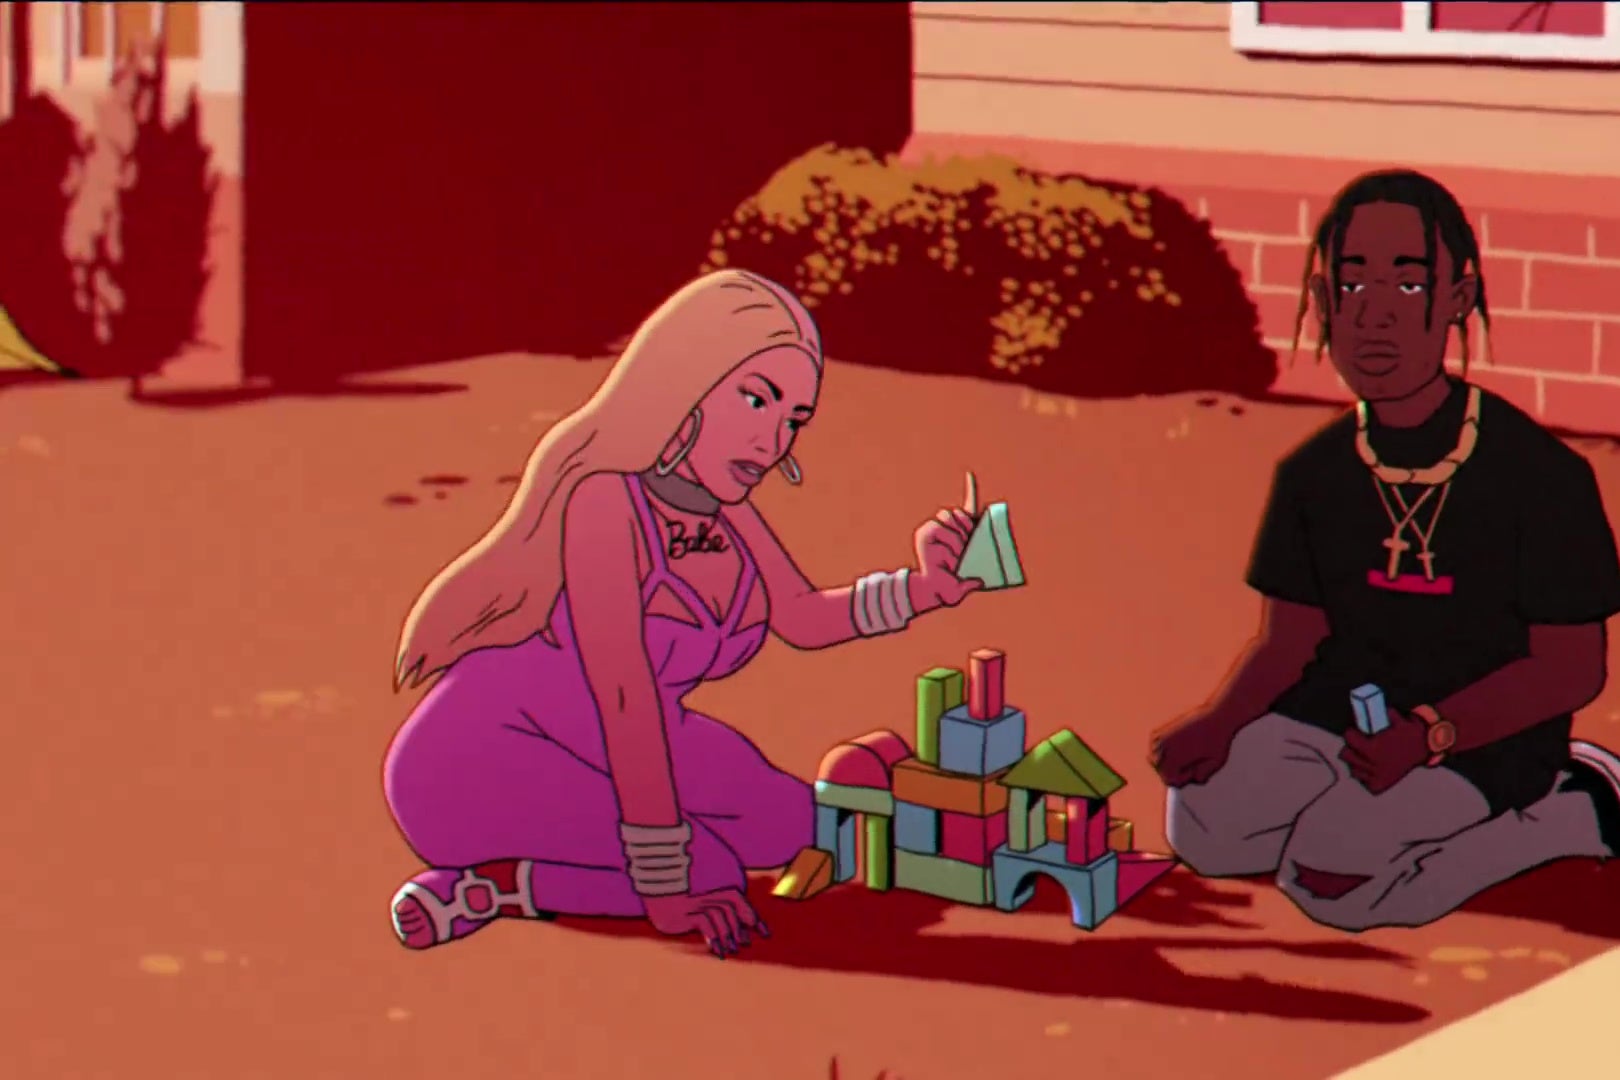 Animated versions of Nicki Minaj and Travis Scott.